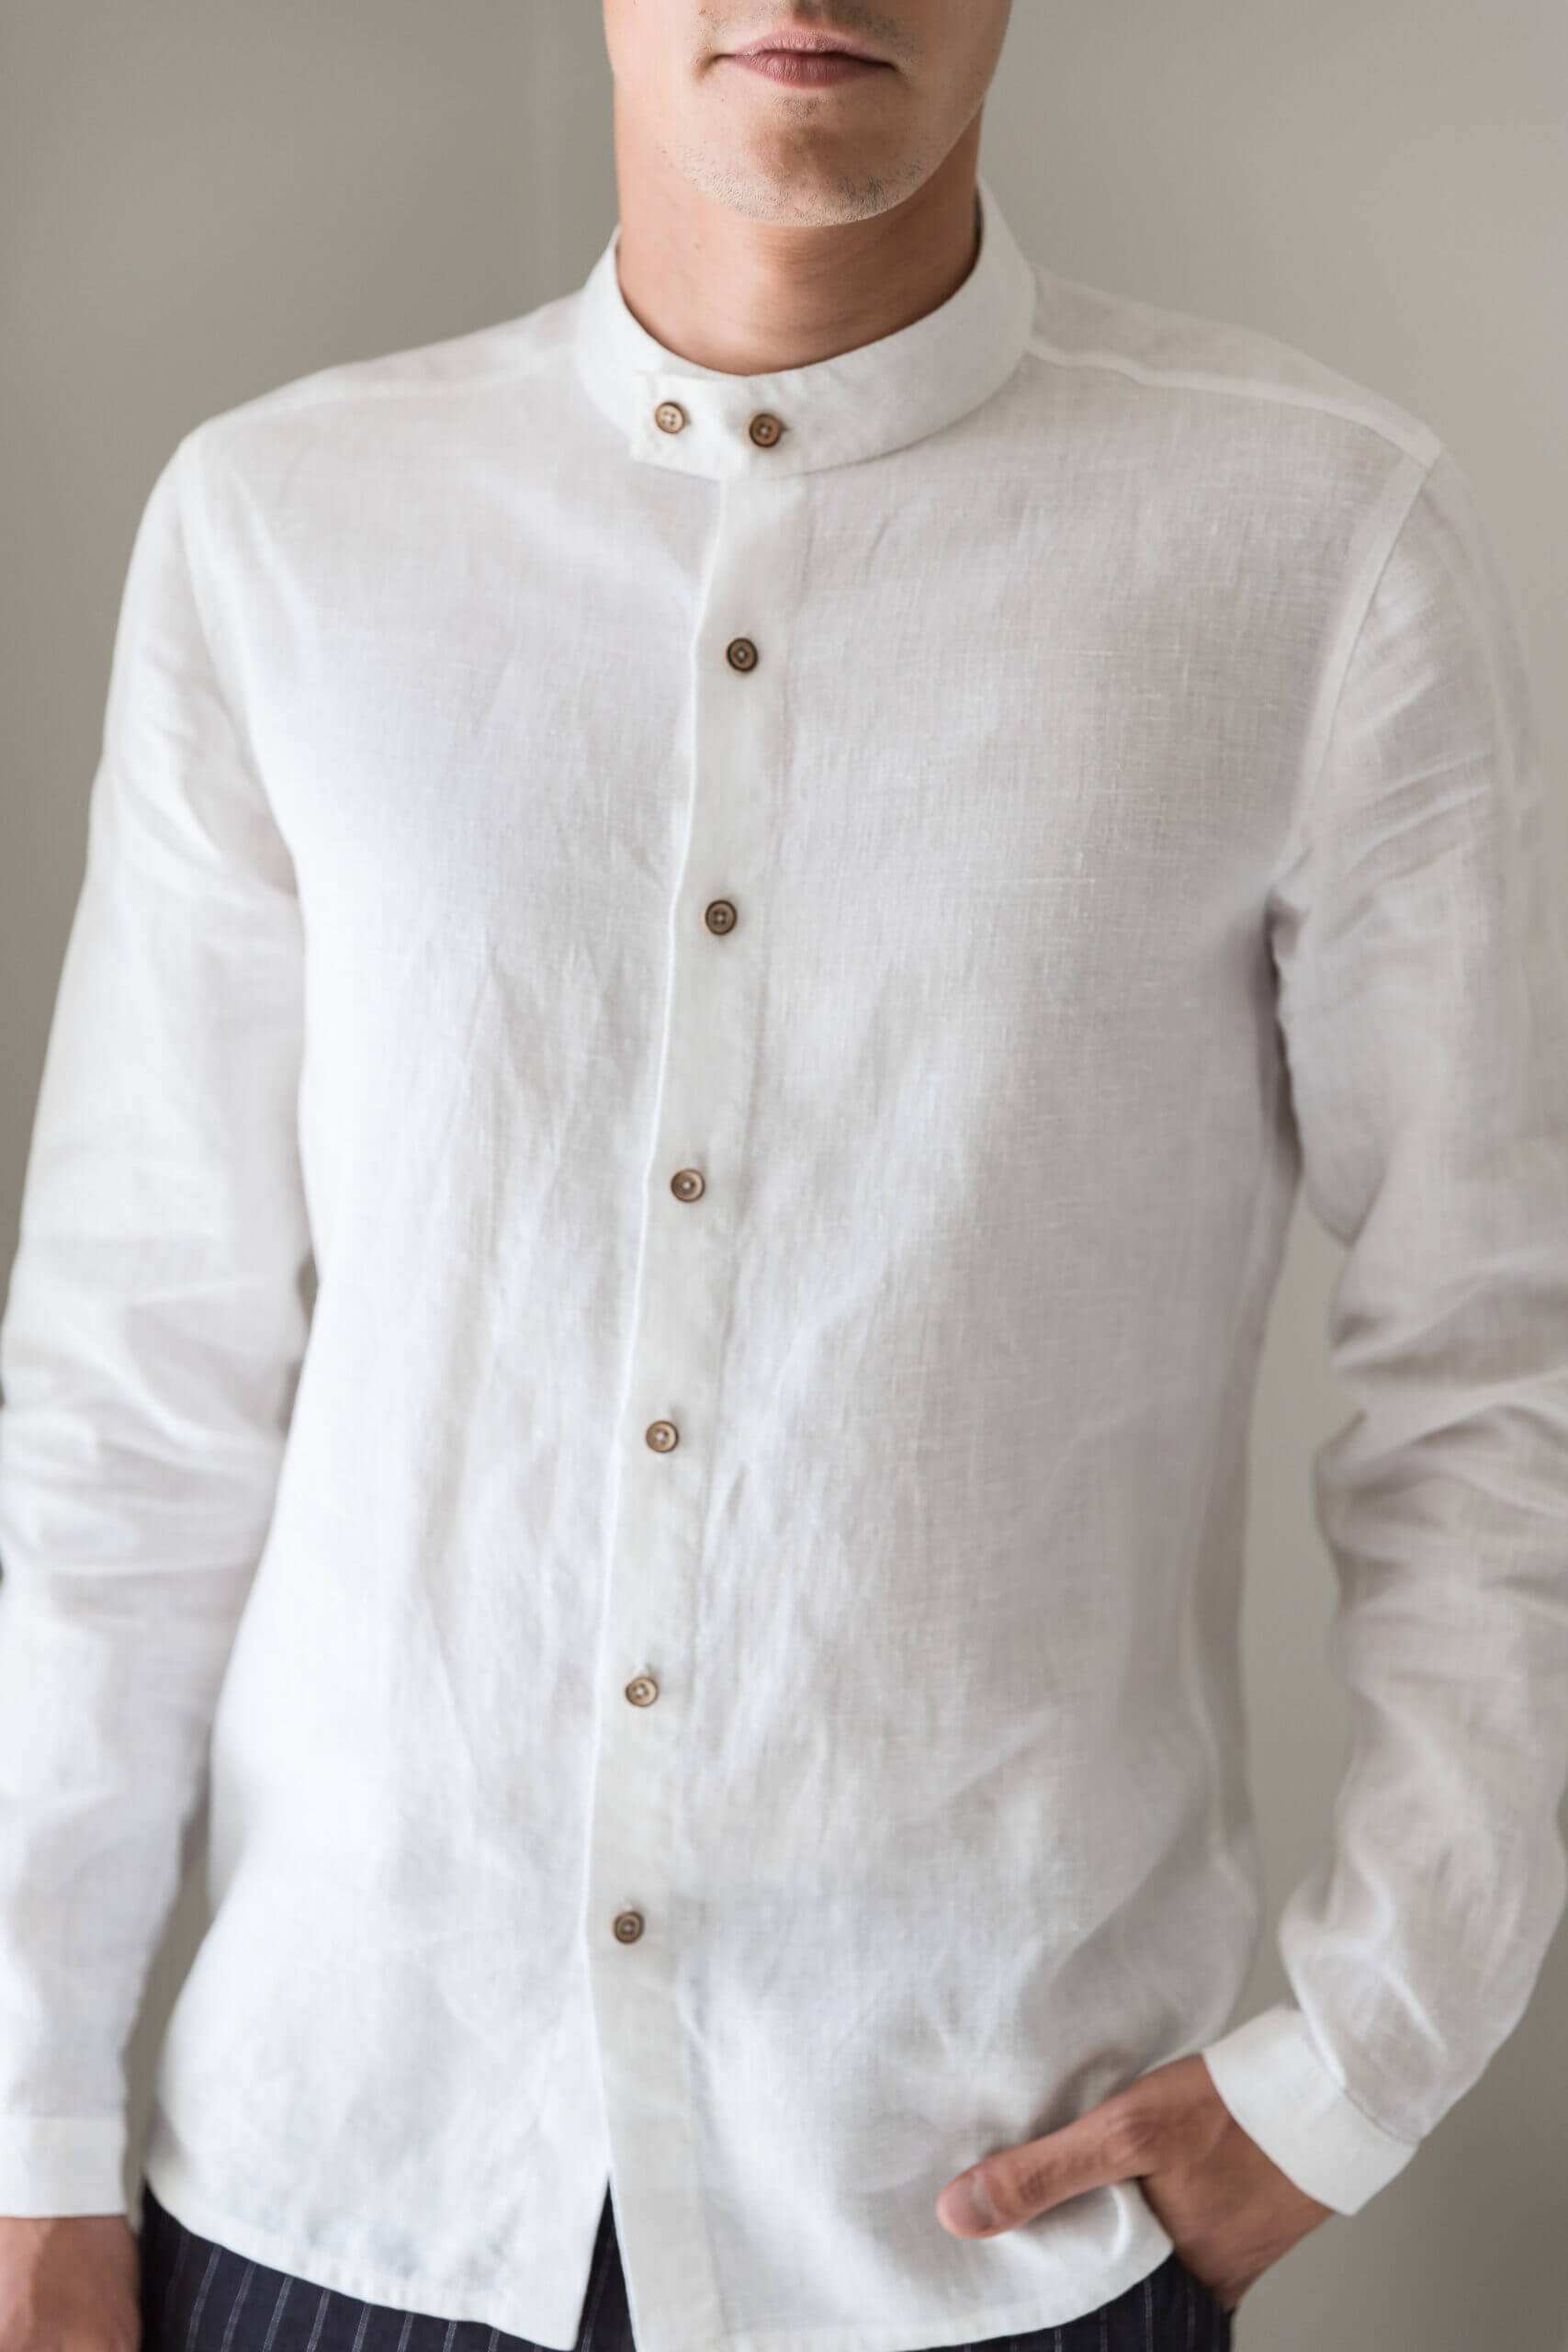 Detailed craftsmanship of the white linen band collar shirt